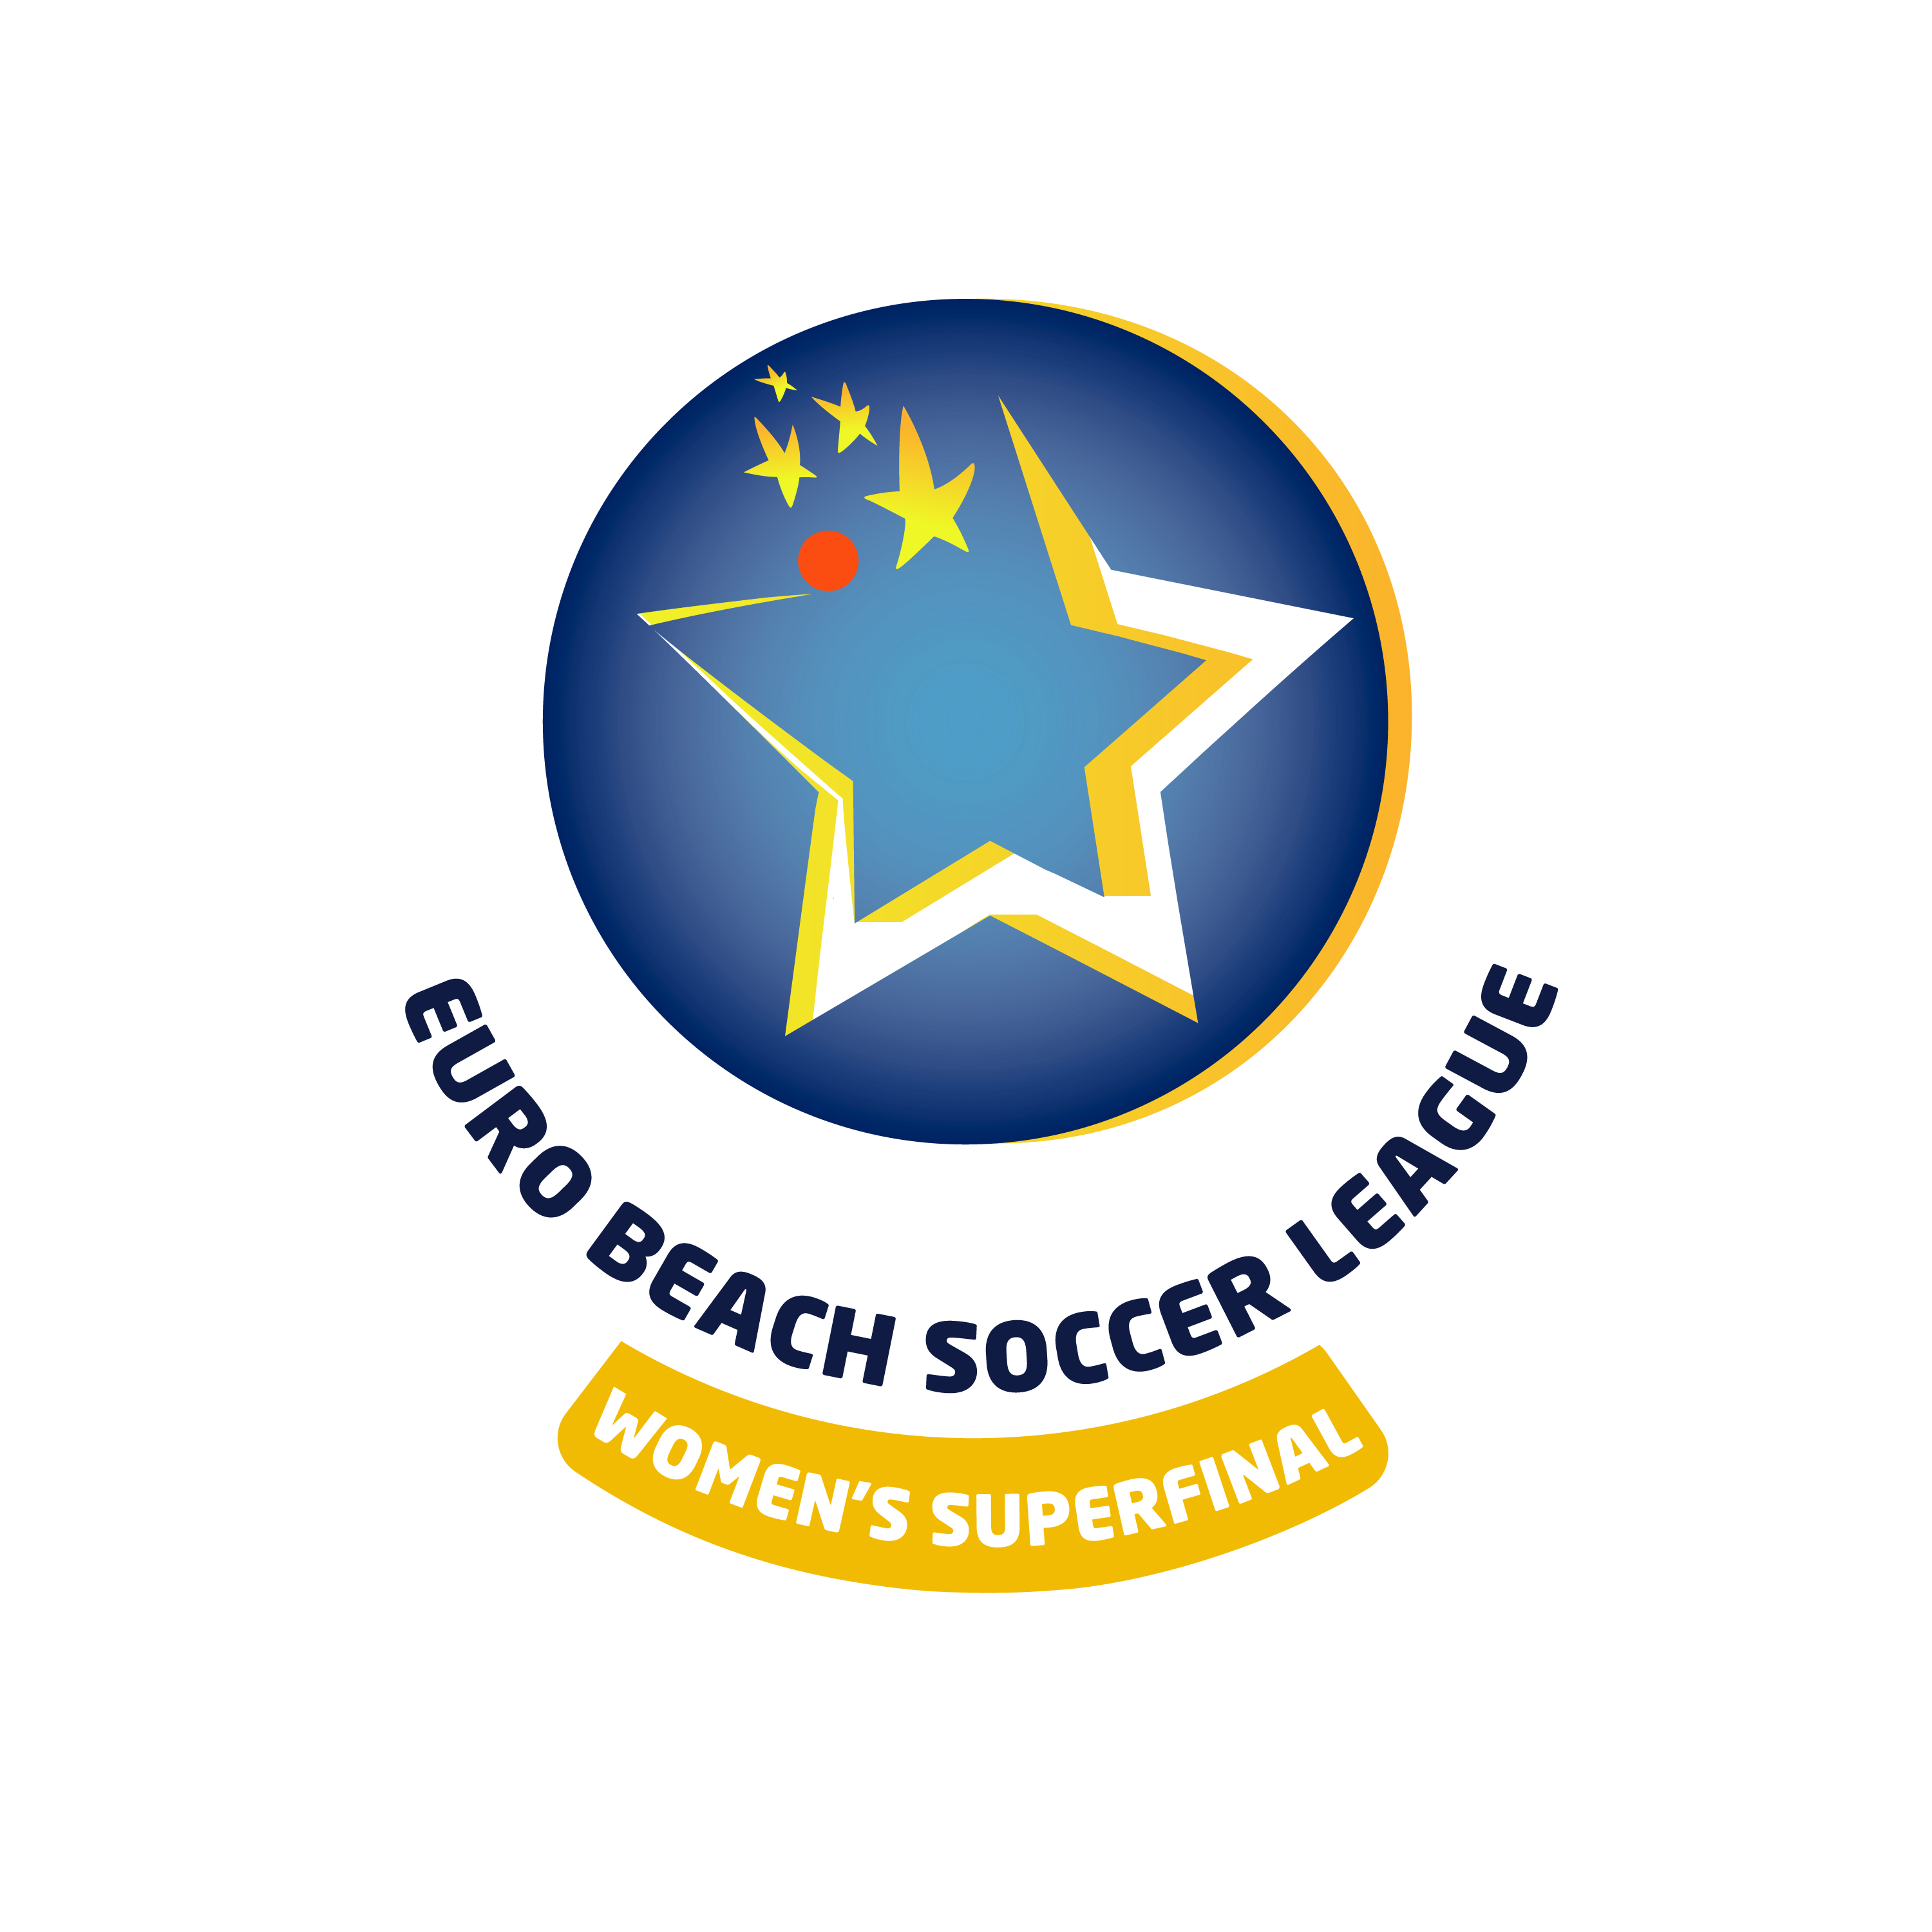 Women's Euro Beach Soccer League 2021 - Superfinal